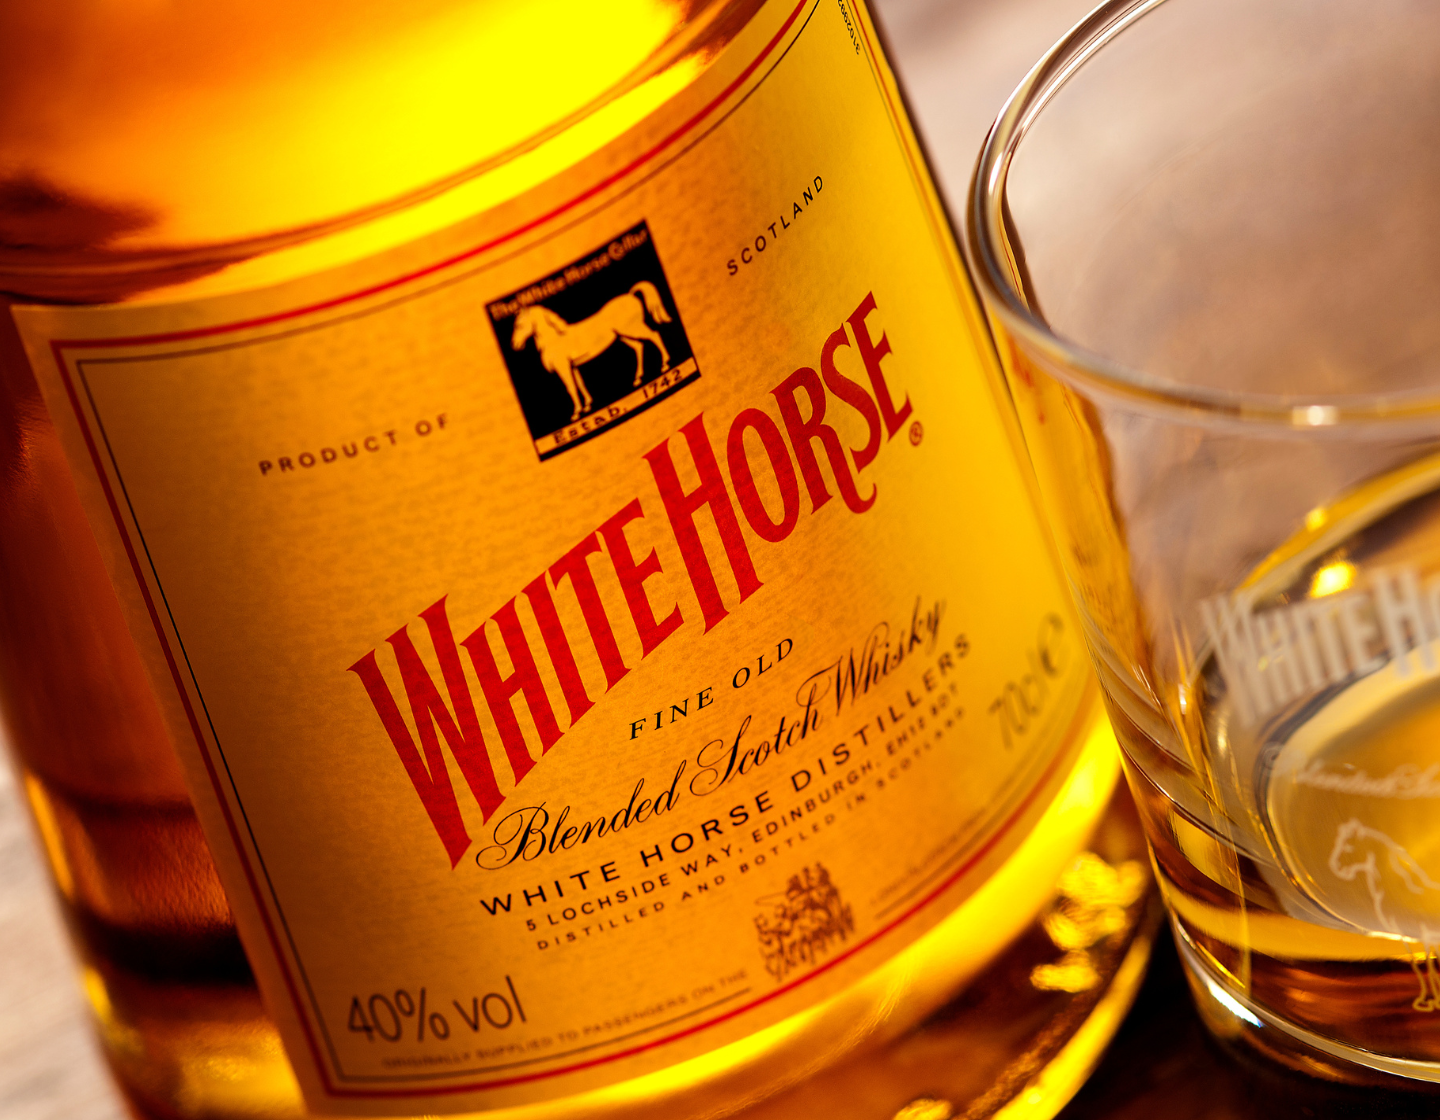 Bottle of White Horse whisky on table beside glass of neat whisky